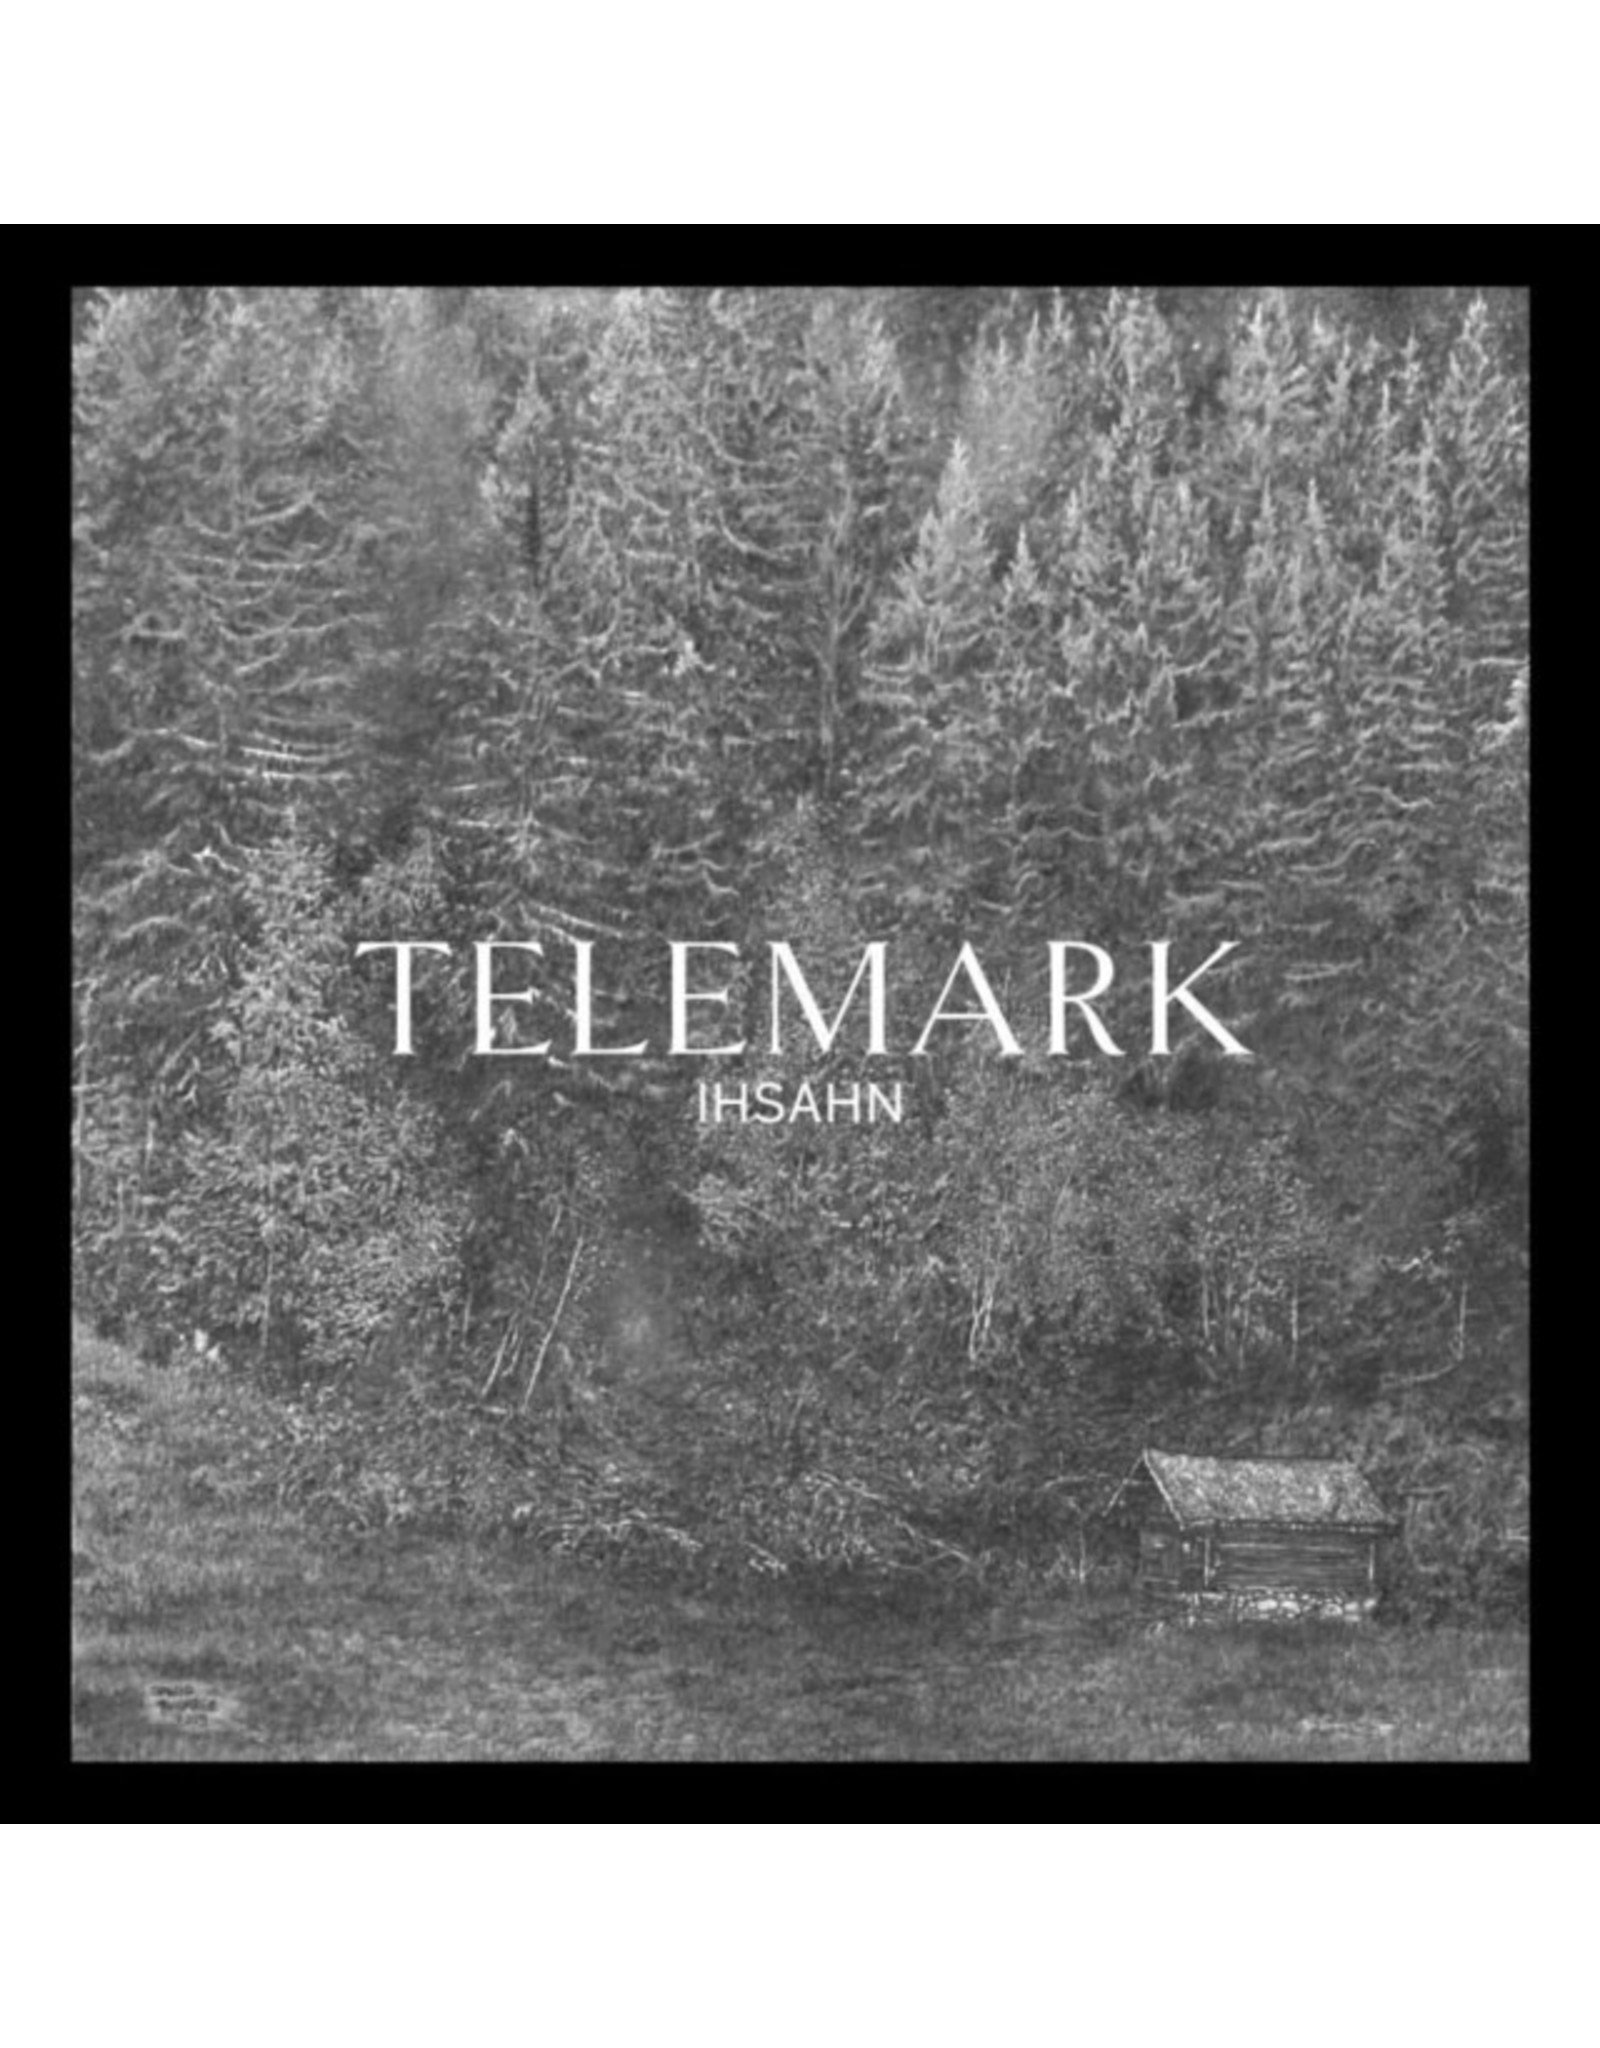 New Vinyl Isahn - Telemark LP